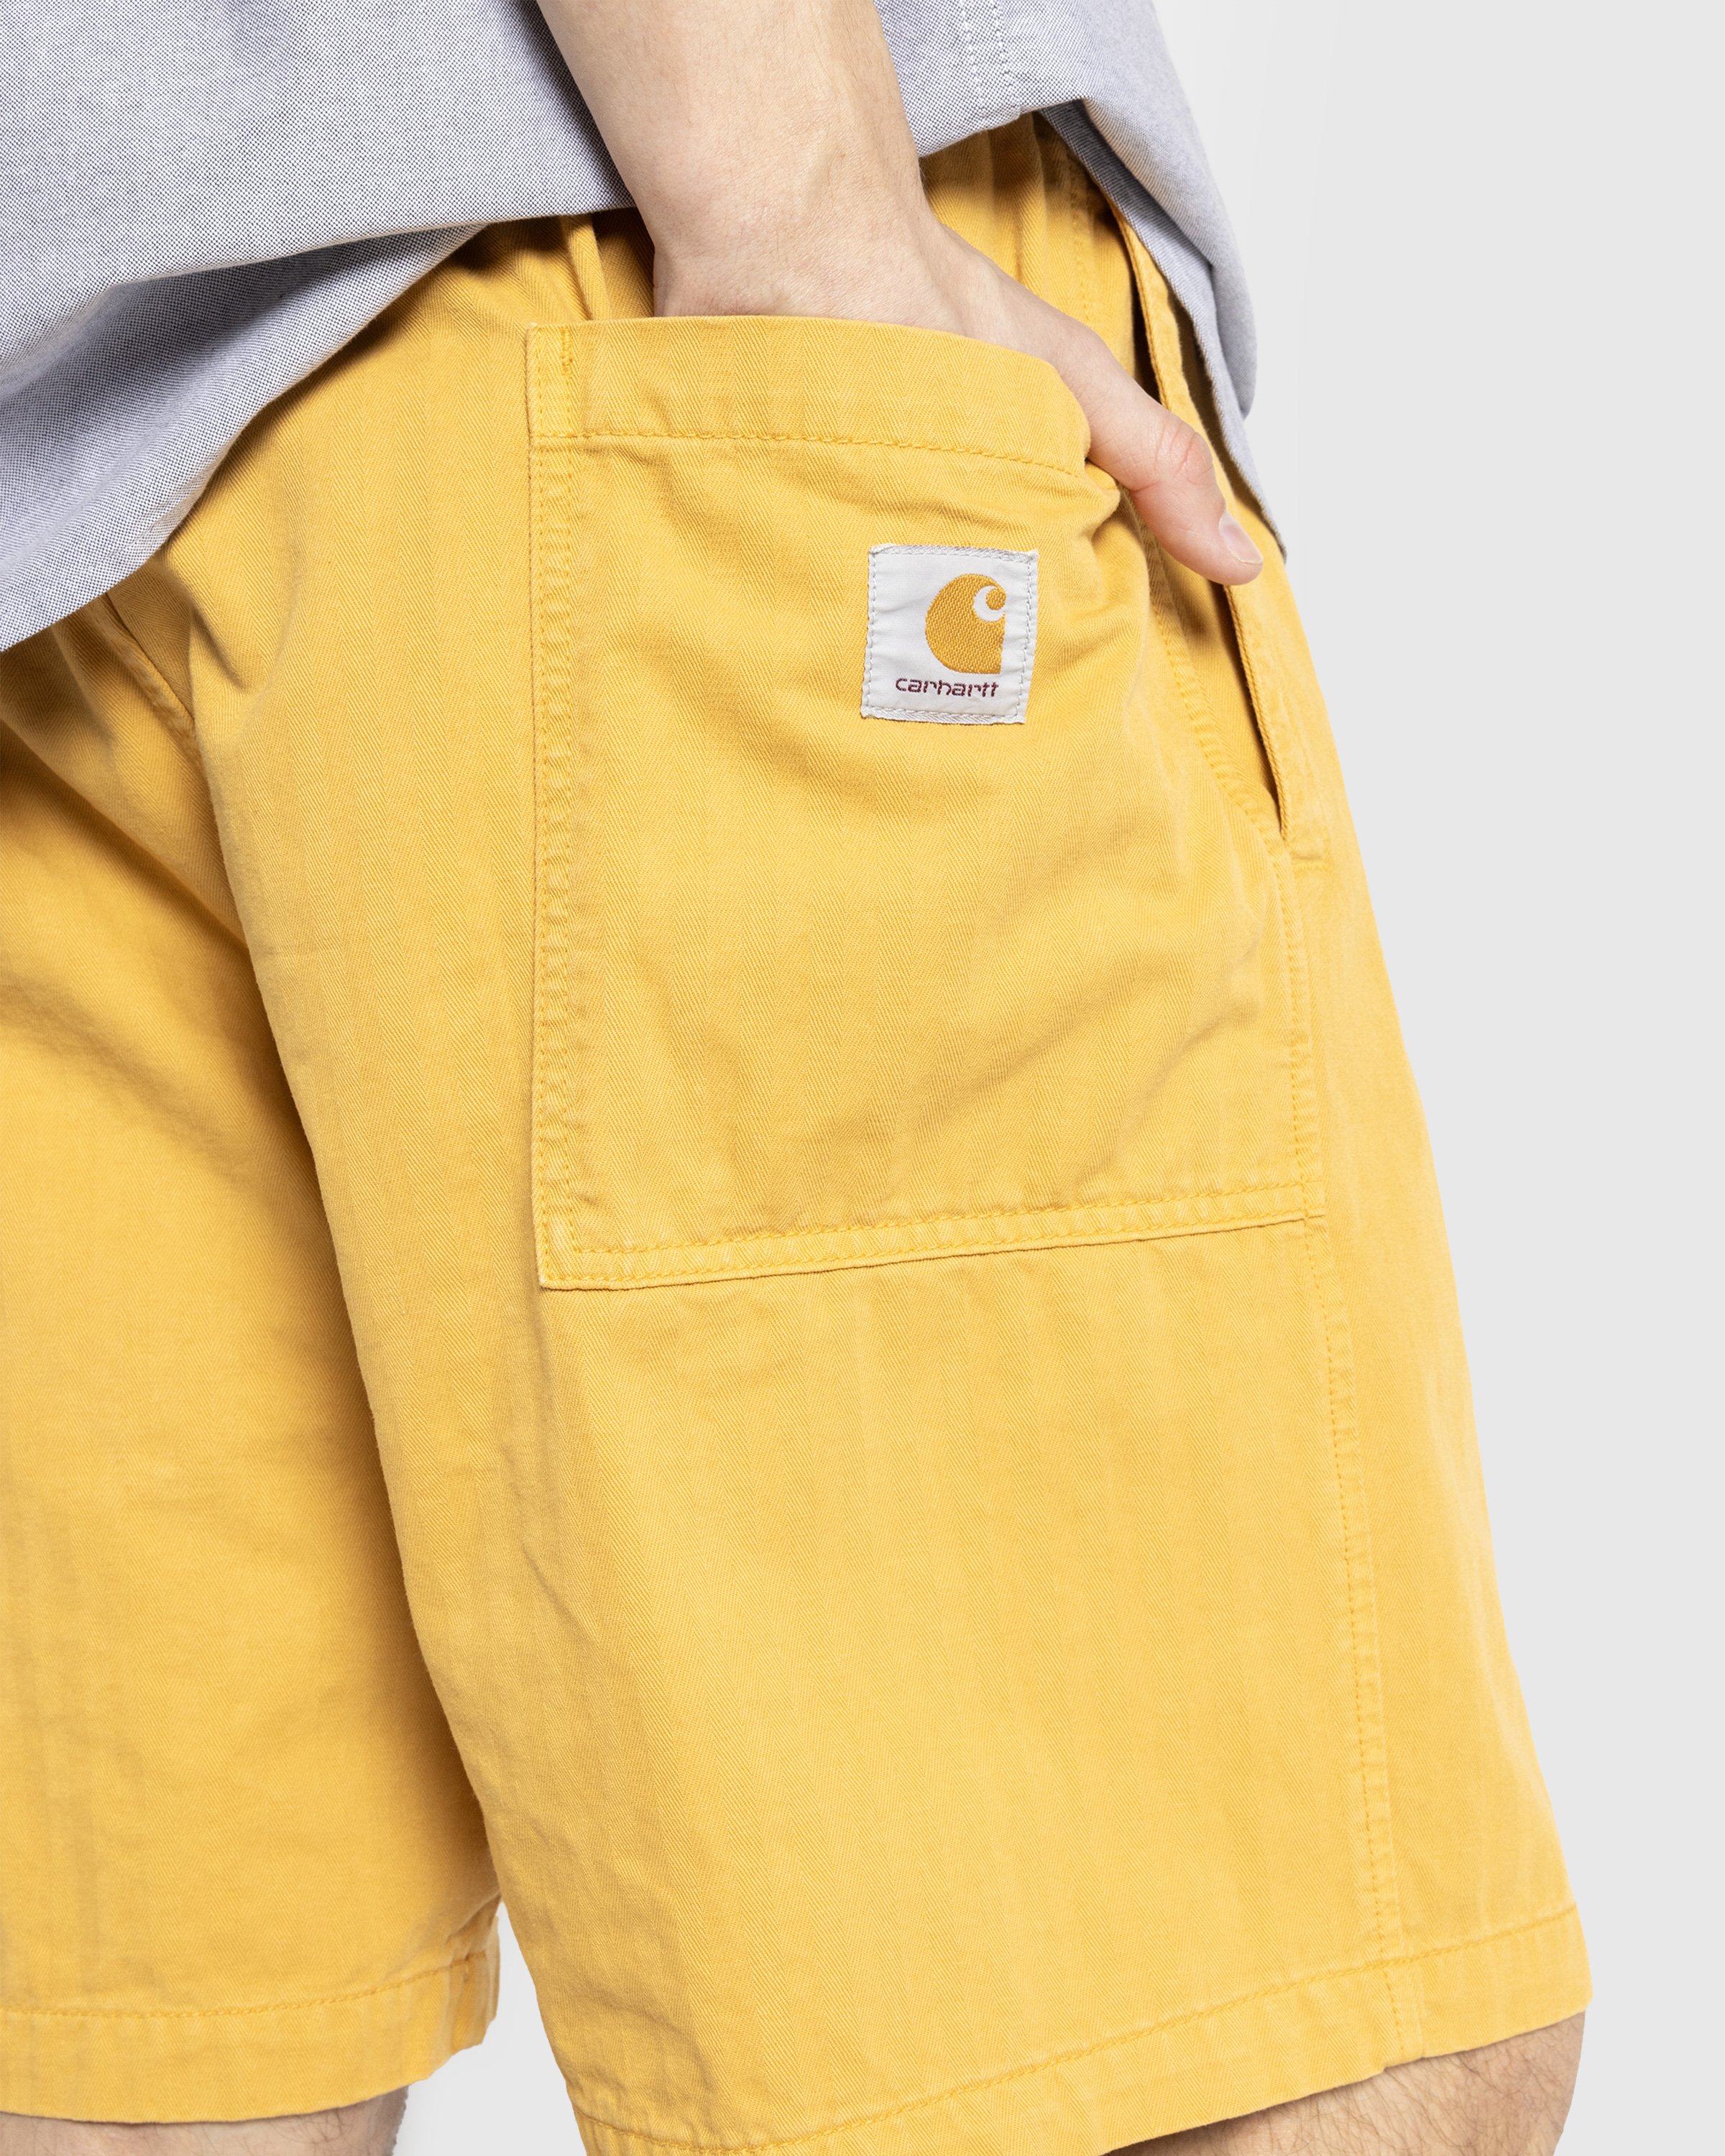 Carhartt WIP - Rainer Short Sunray /garment dyed - Clothing - Yellow - Image 5